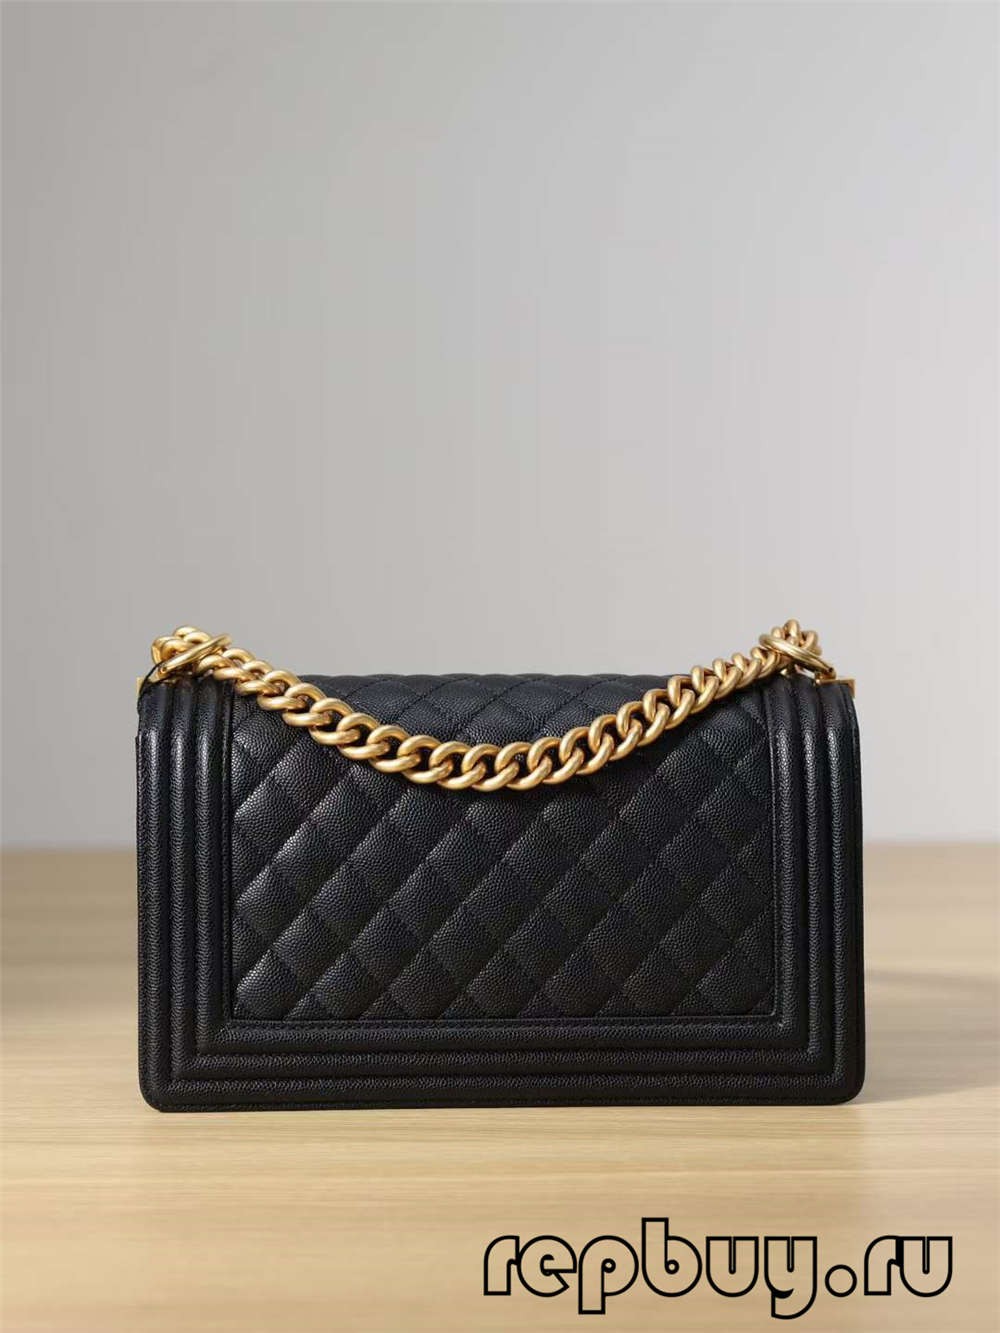 Chanel Leboy Top Replica Handbag Medium Gold Buckle (2022 Edition)-Best Quality Fake Louis Vuitton Bag Online Store, Replica designer bag ru